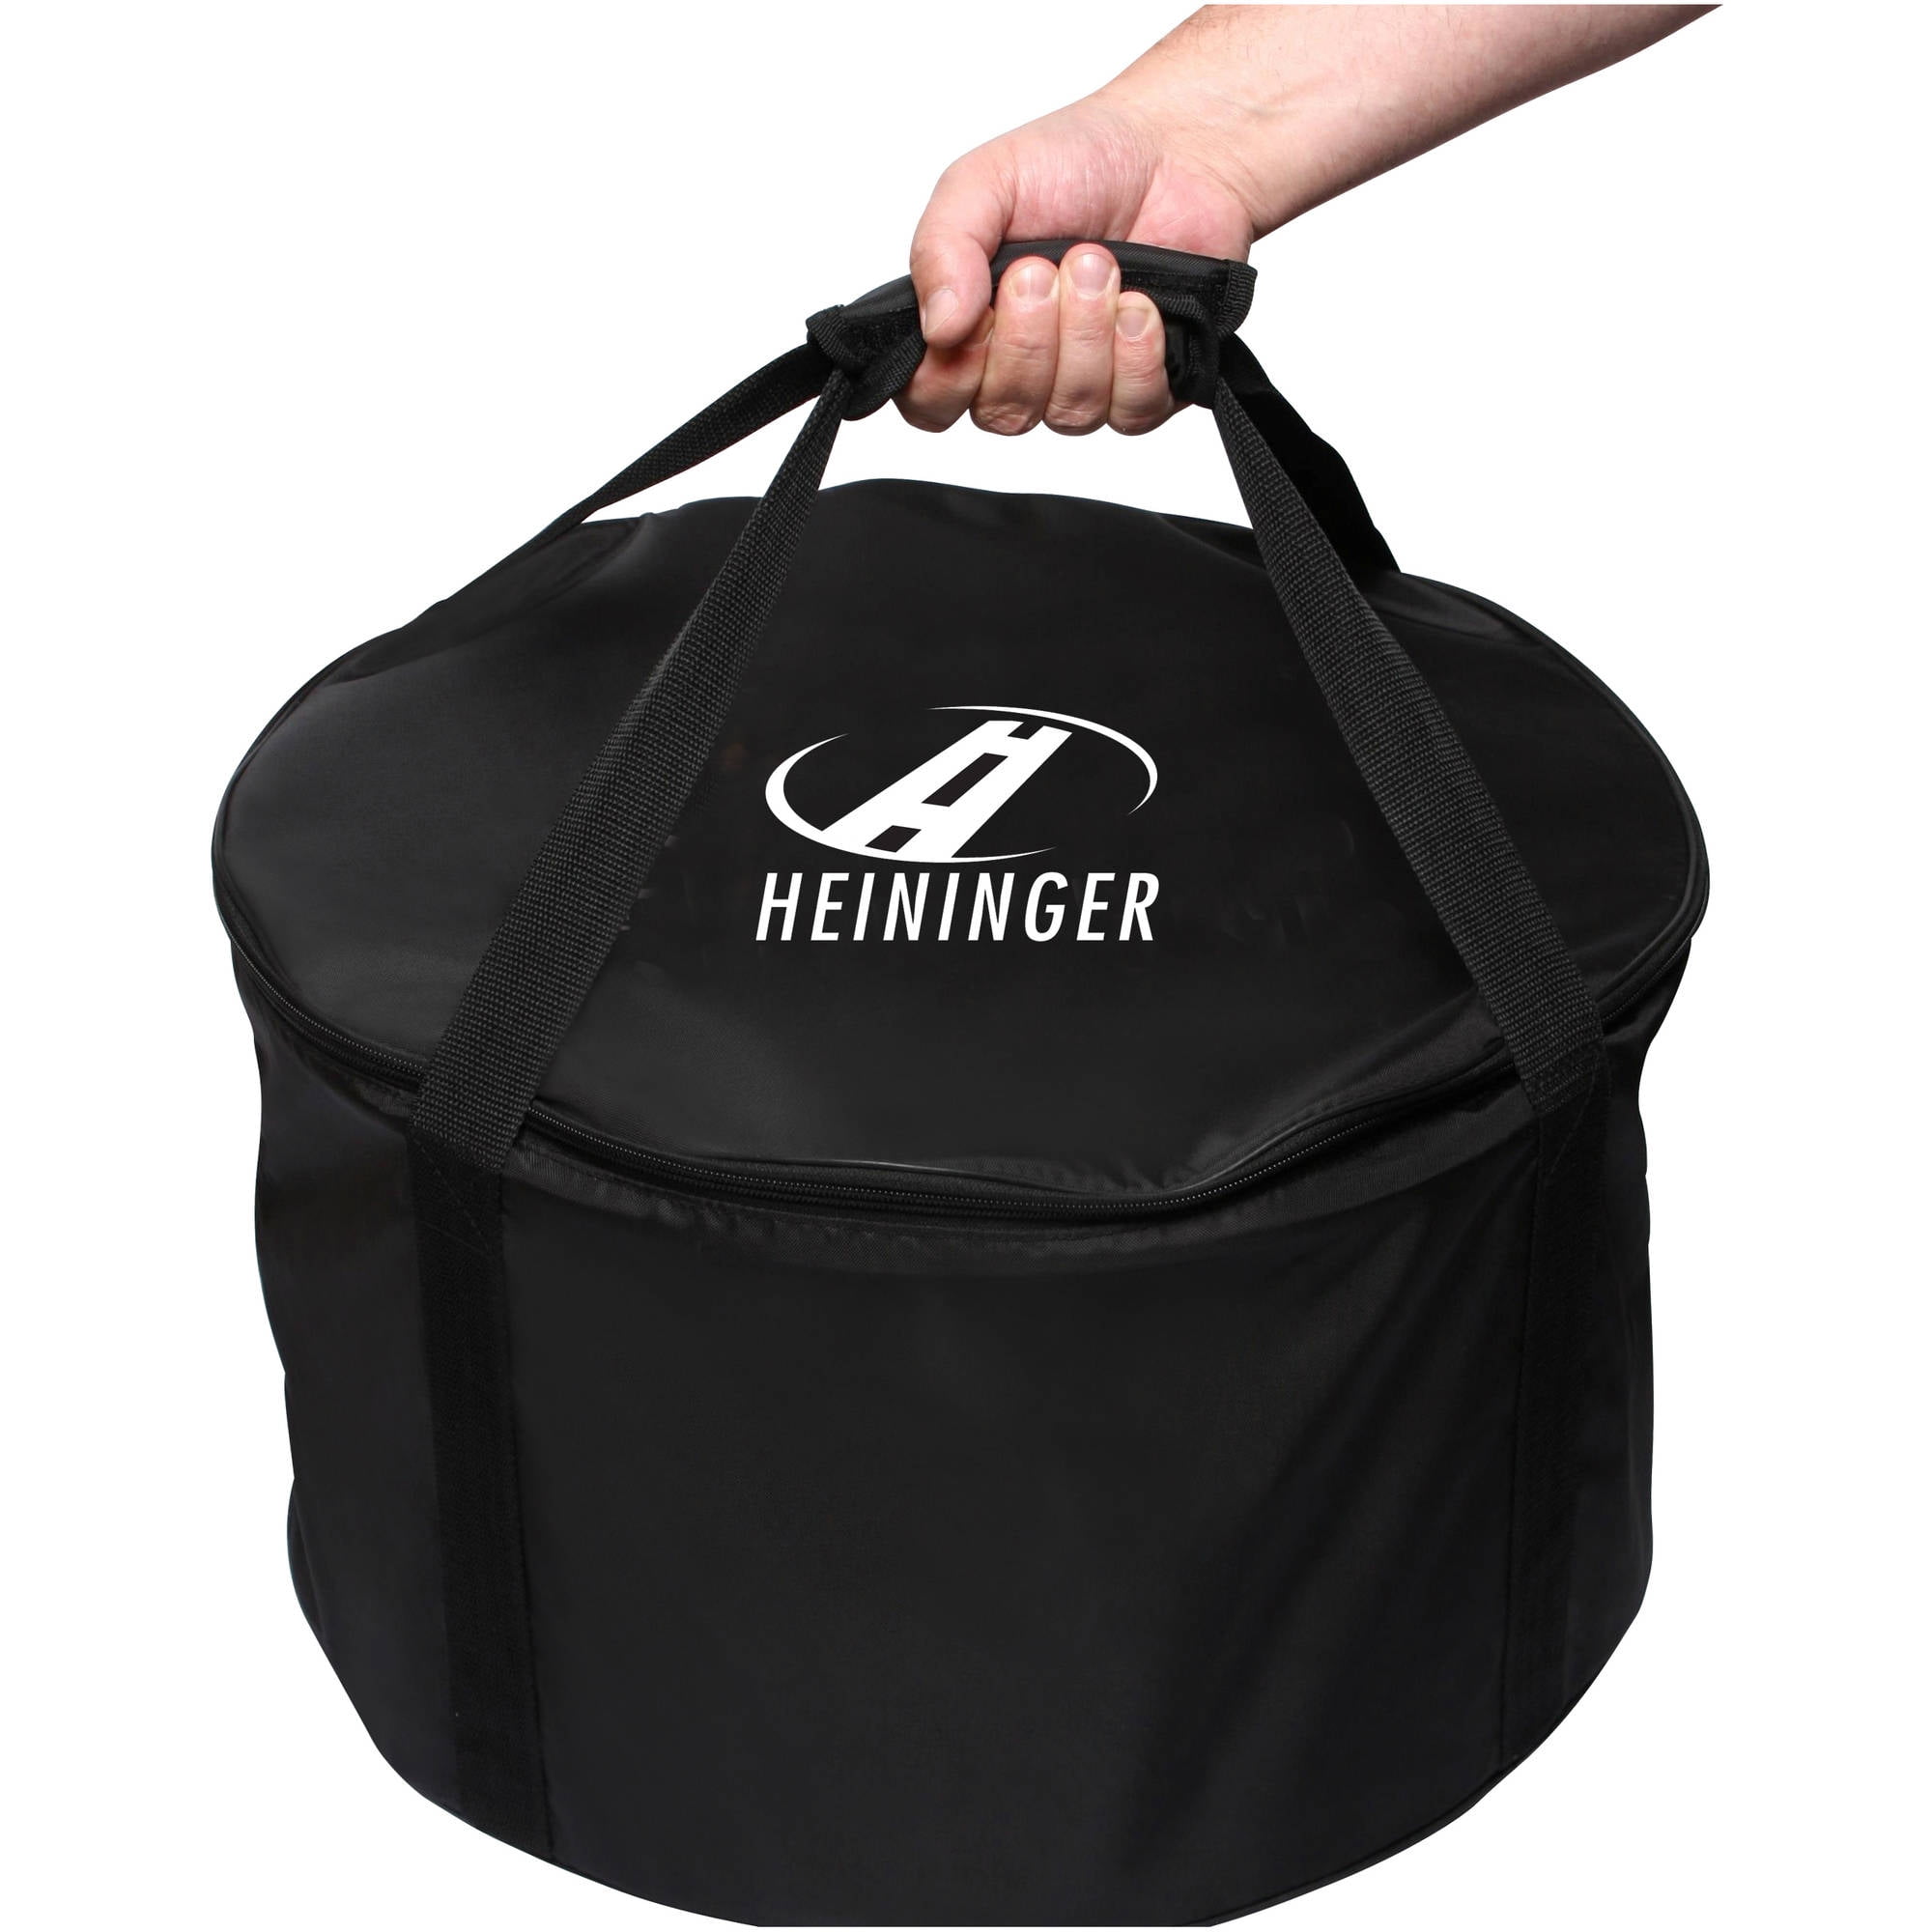 DestinationGear Carry Bag for Heininger 5995 Portable Propane Outdoor